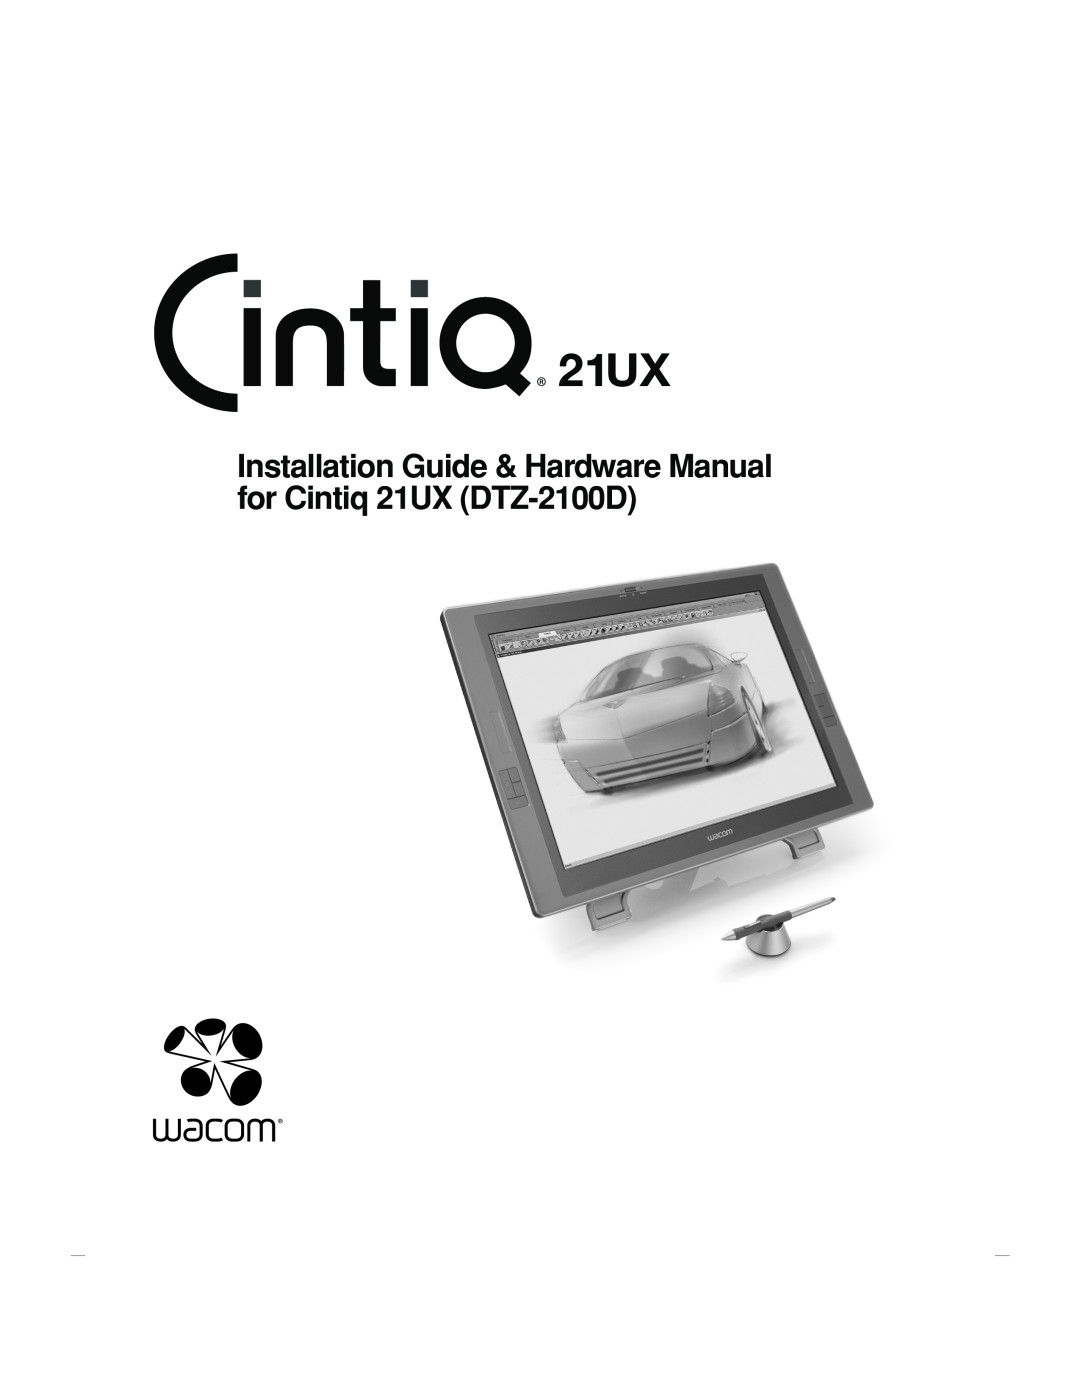 Wacom manual Installation Guide & Hardware Manual for Cintiq 21UX DTZ-2100D 